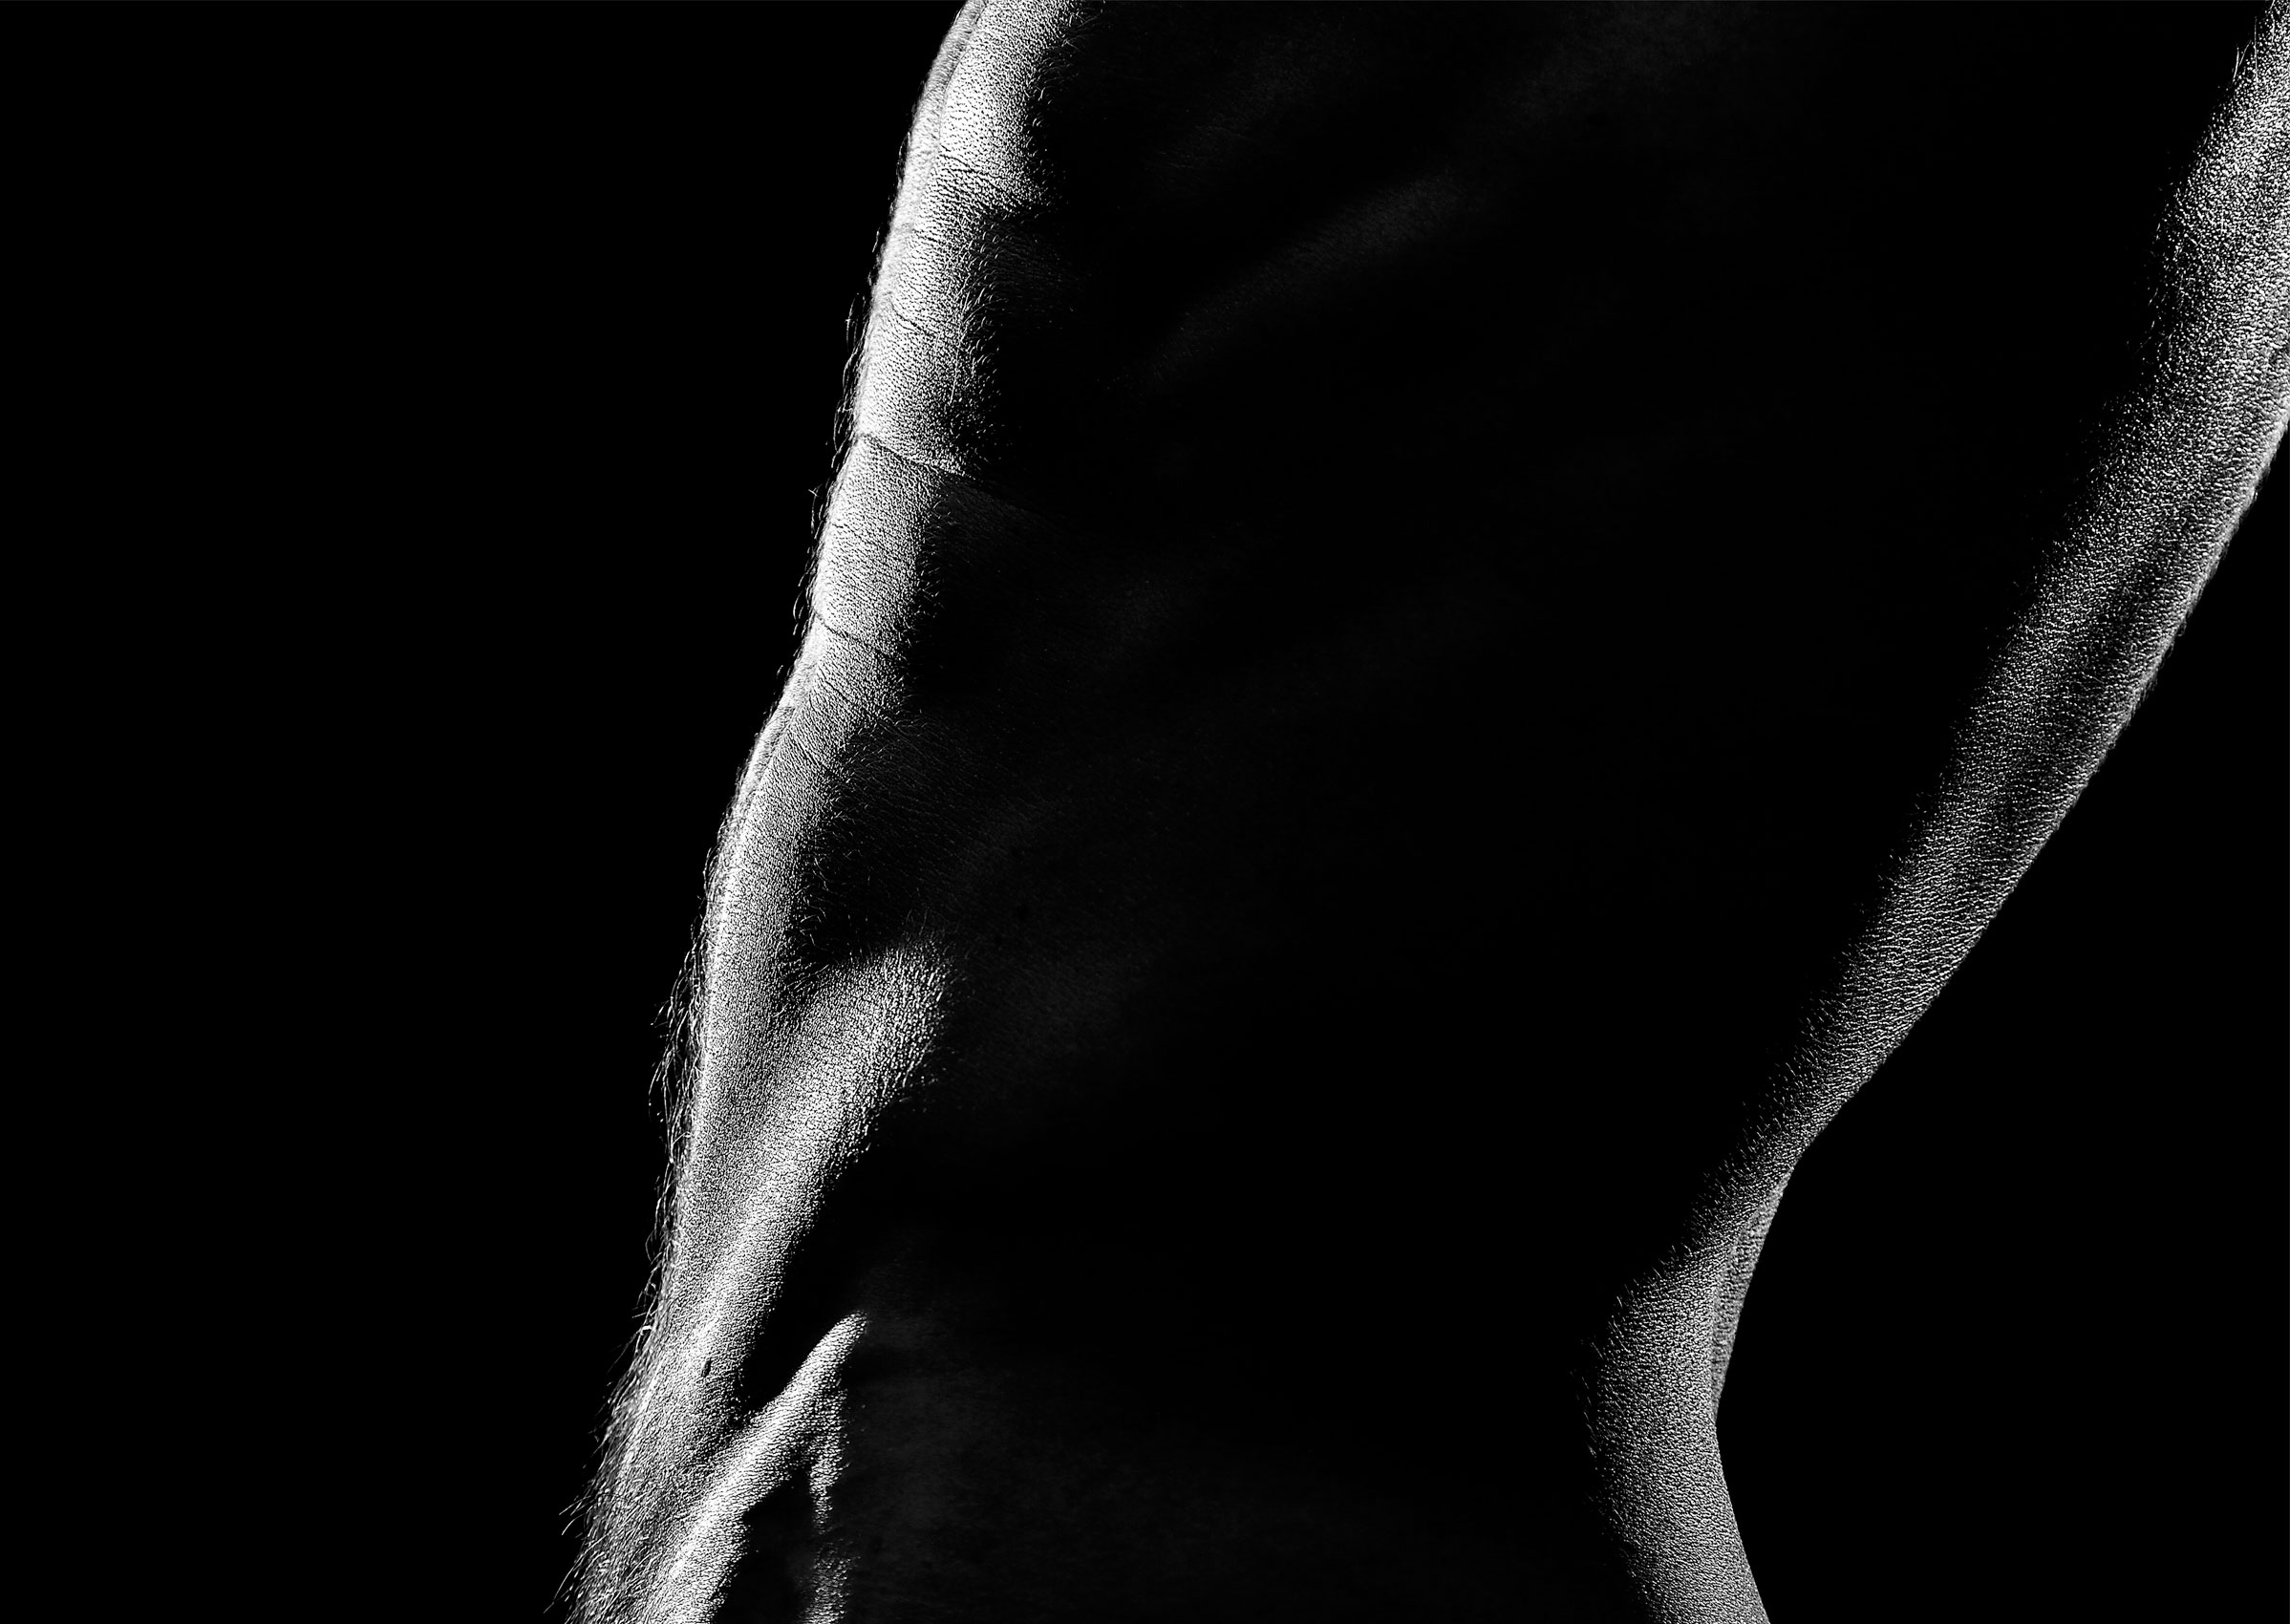 Sexy high contrast fine art portrait of nude male athlete